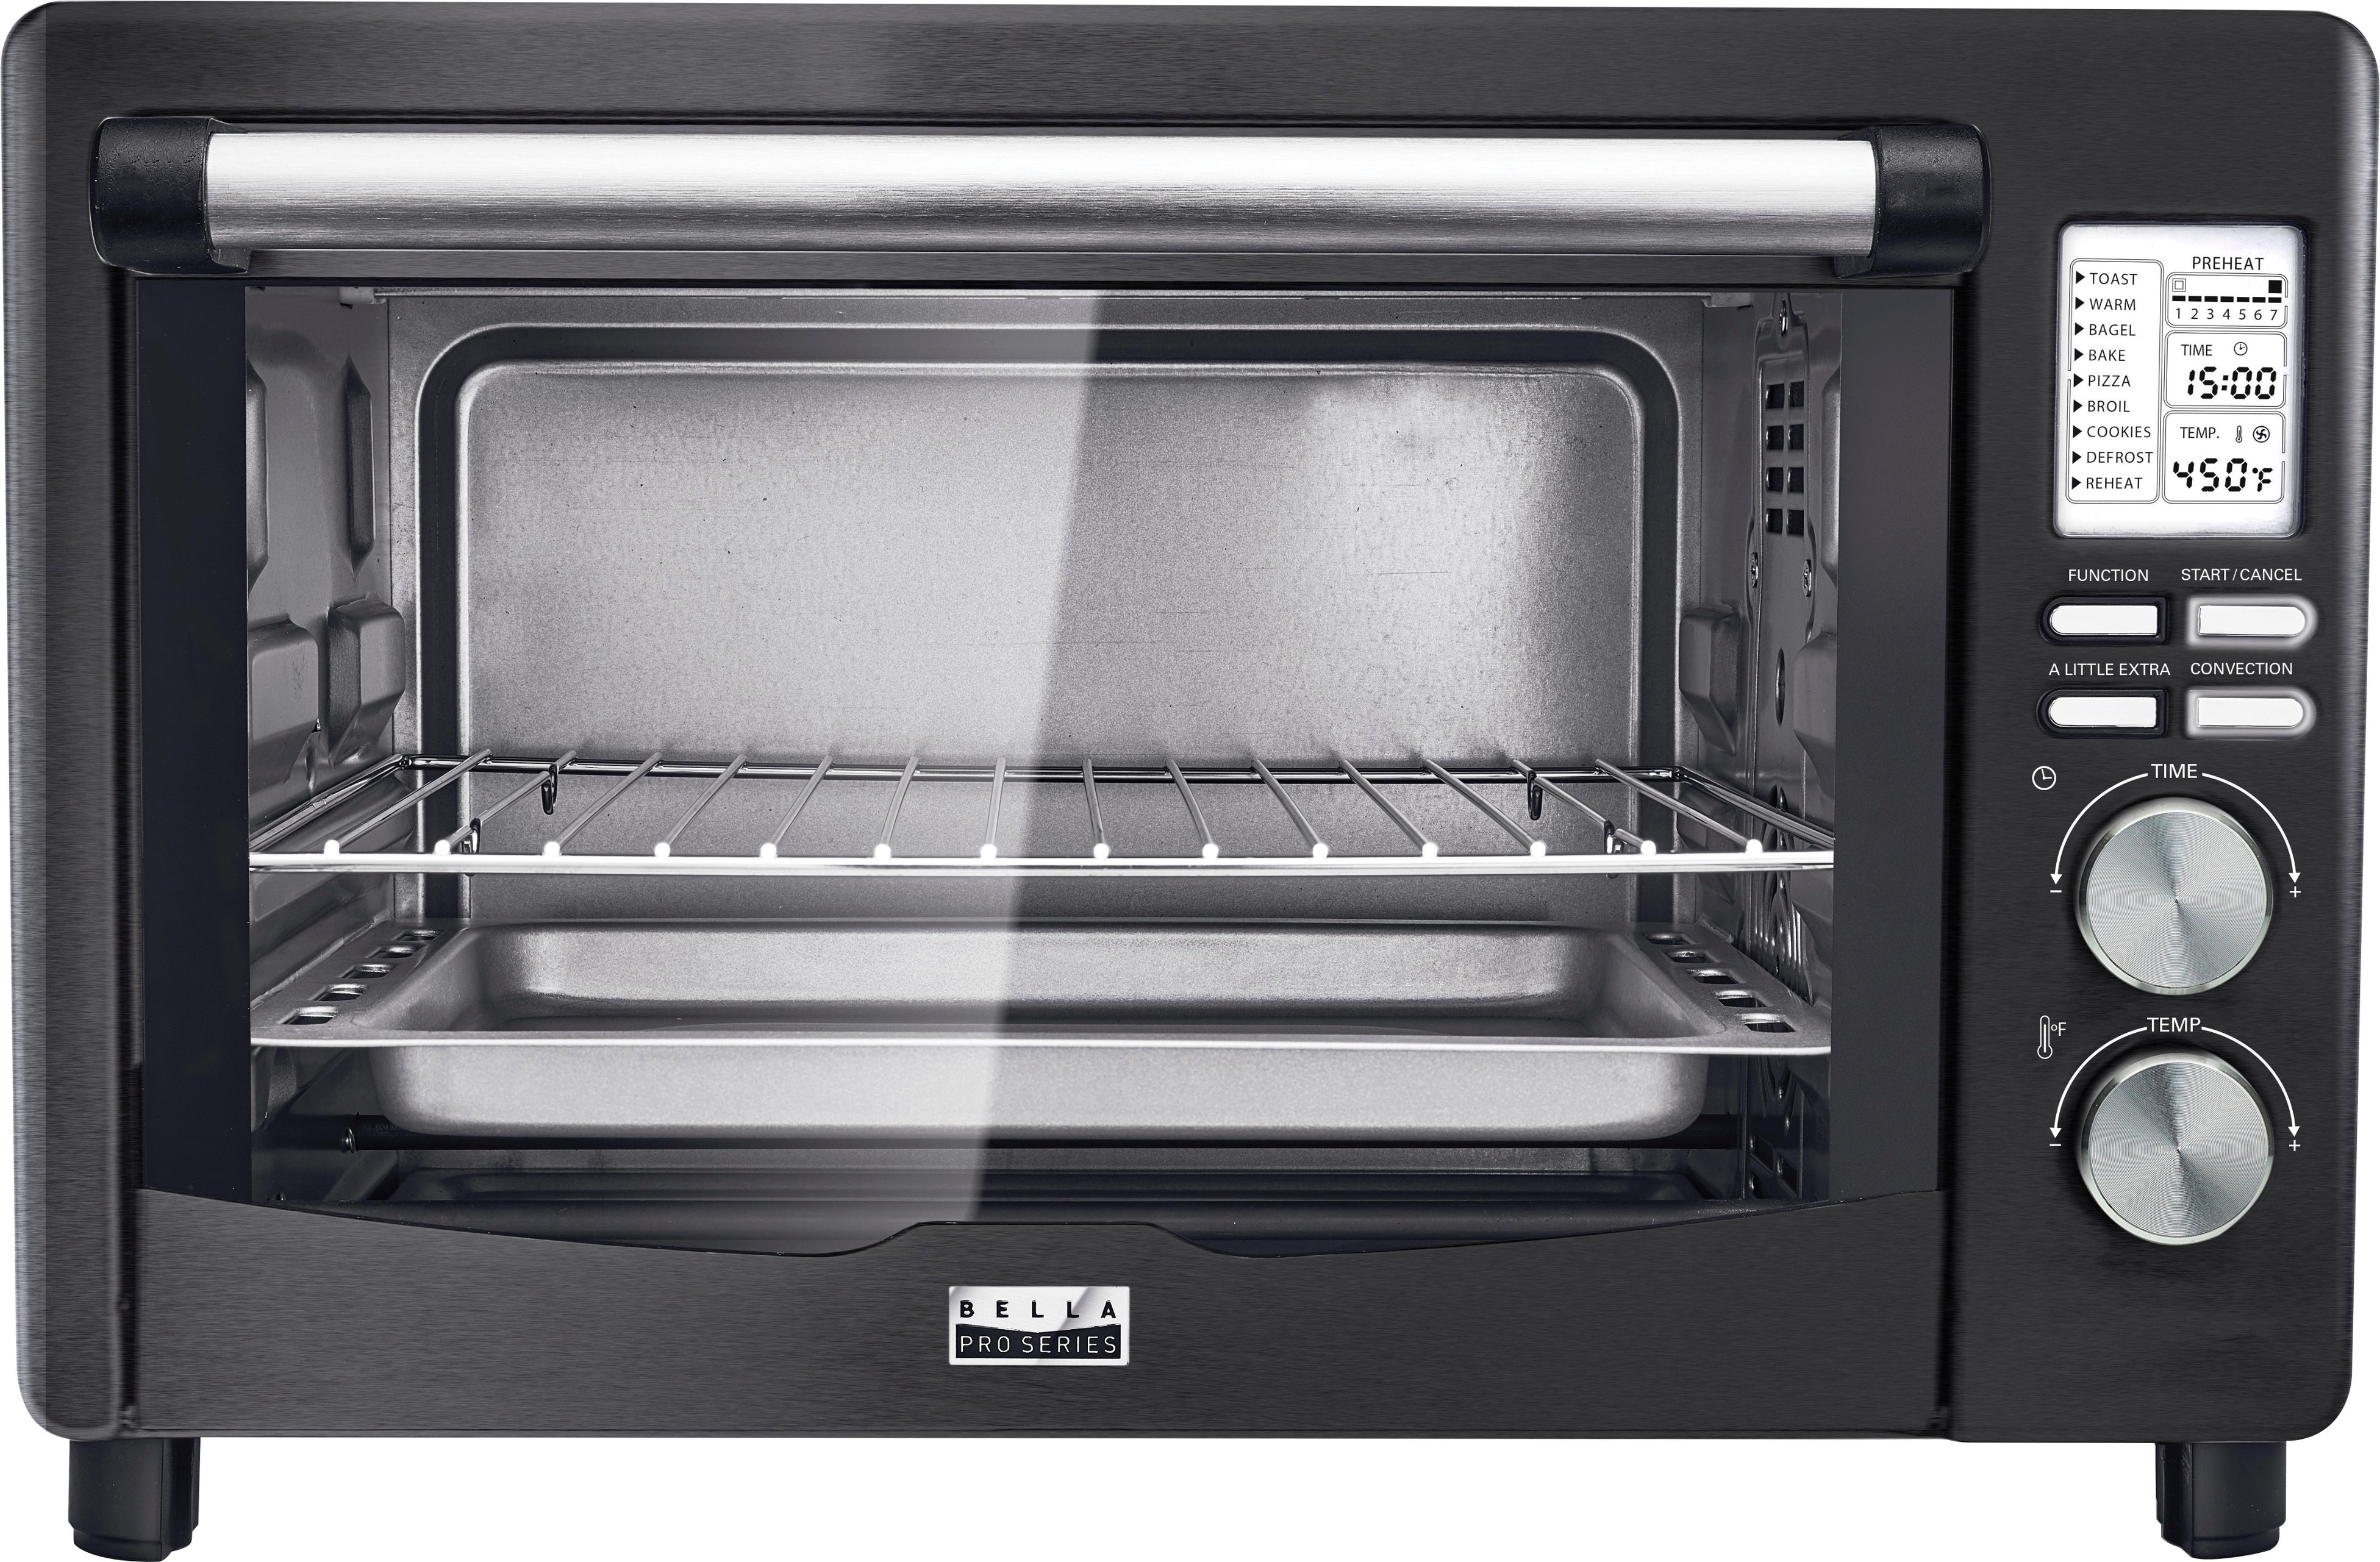 Bella Pro Series 6 Slice Toaster Oven Black Stainless Steel 90060